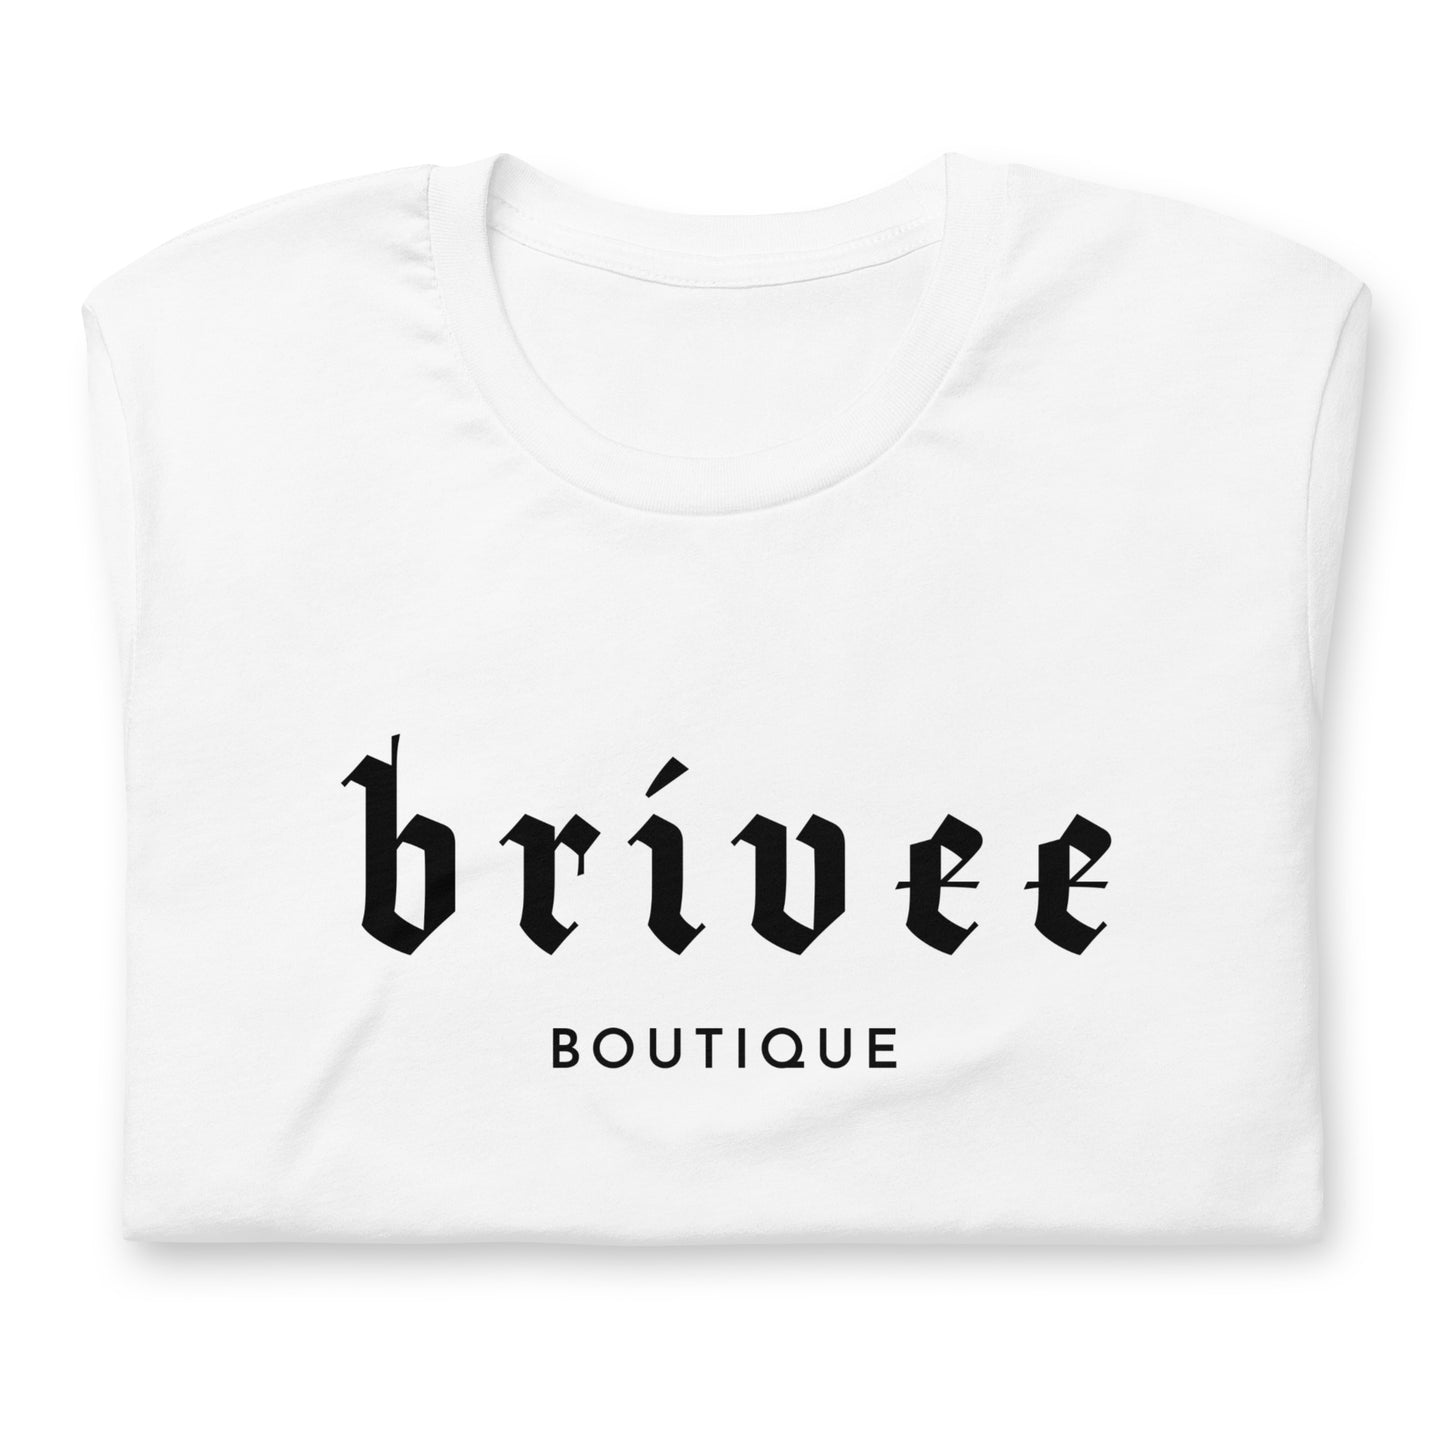 Brivee Boutique | T-Shirt | Regular Fit